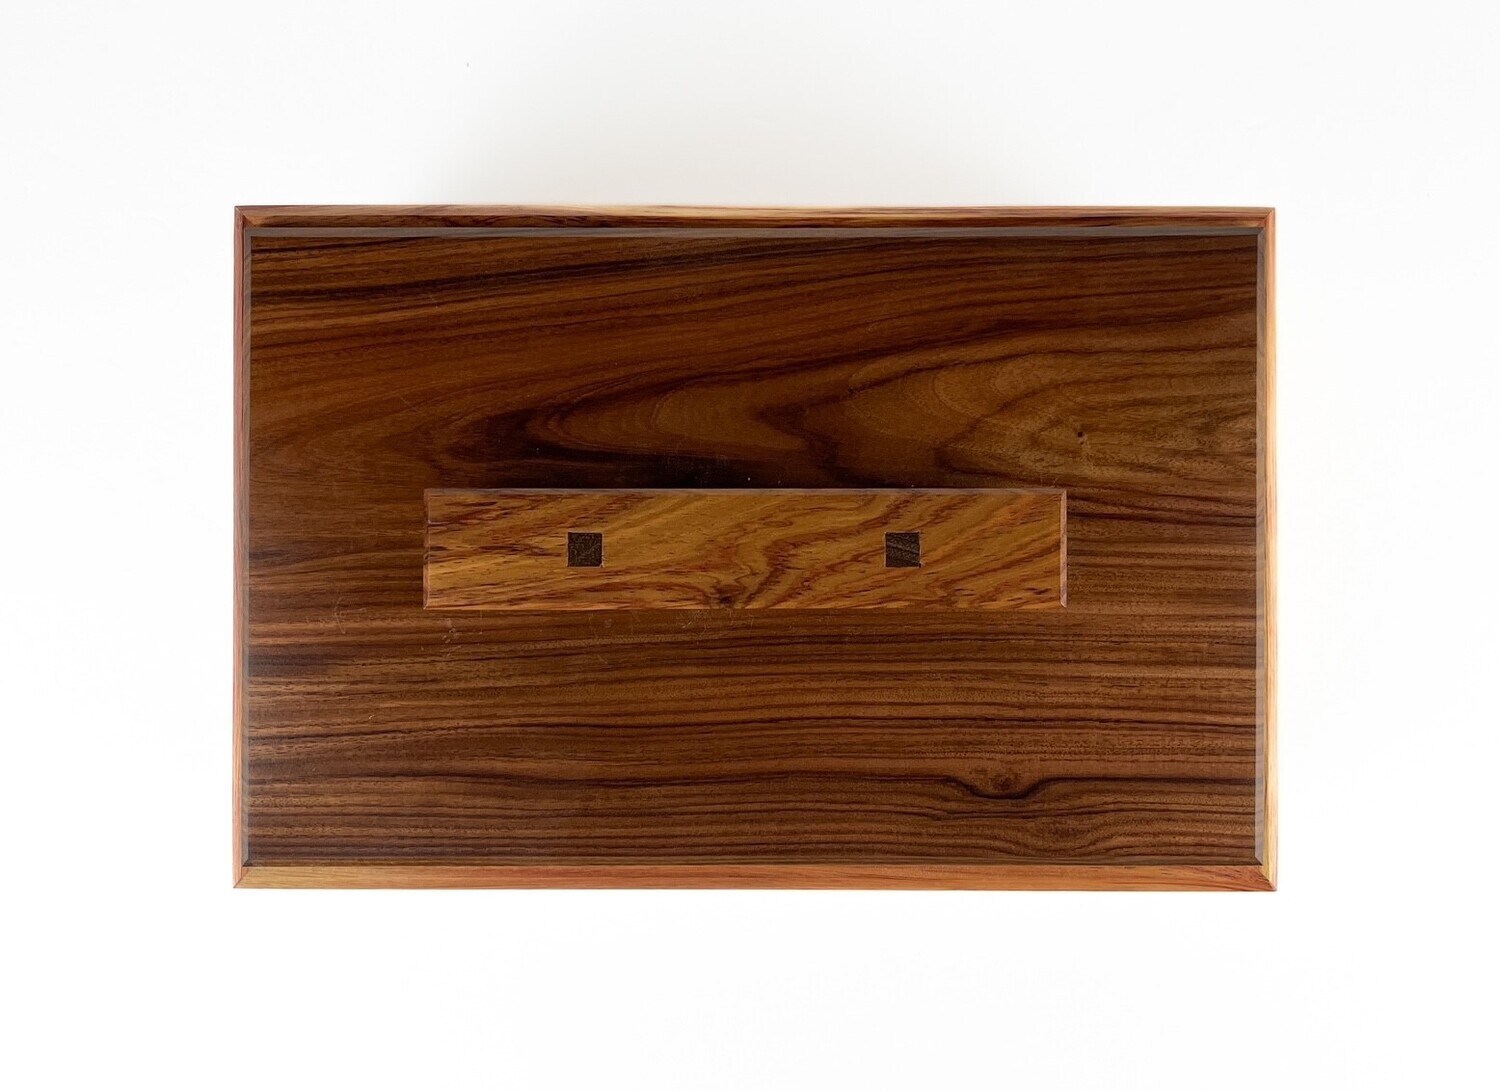 Wooden Keepsake Box Canary Wood, Santos Rosewood Top 10.57x4.25"